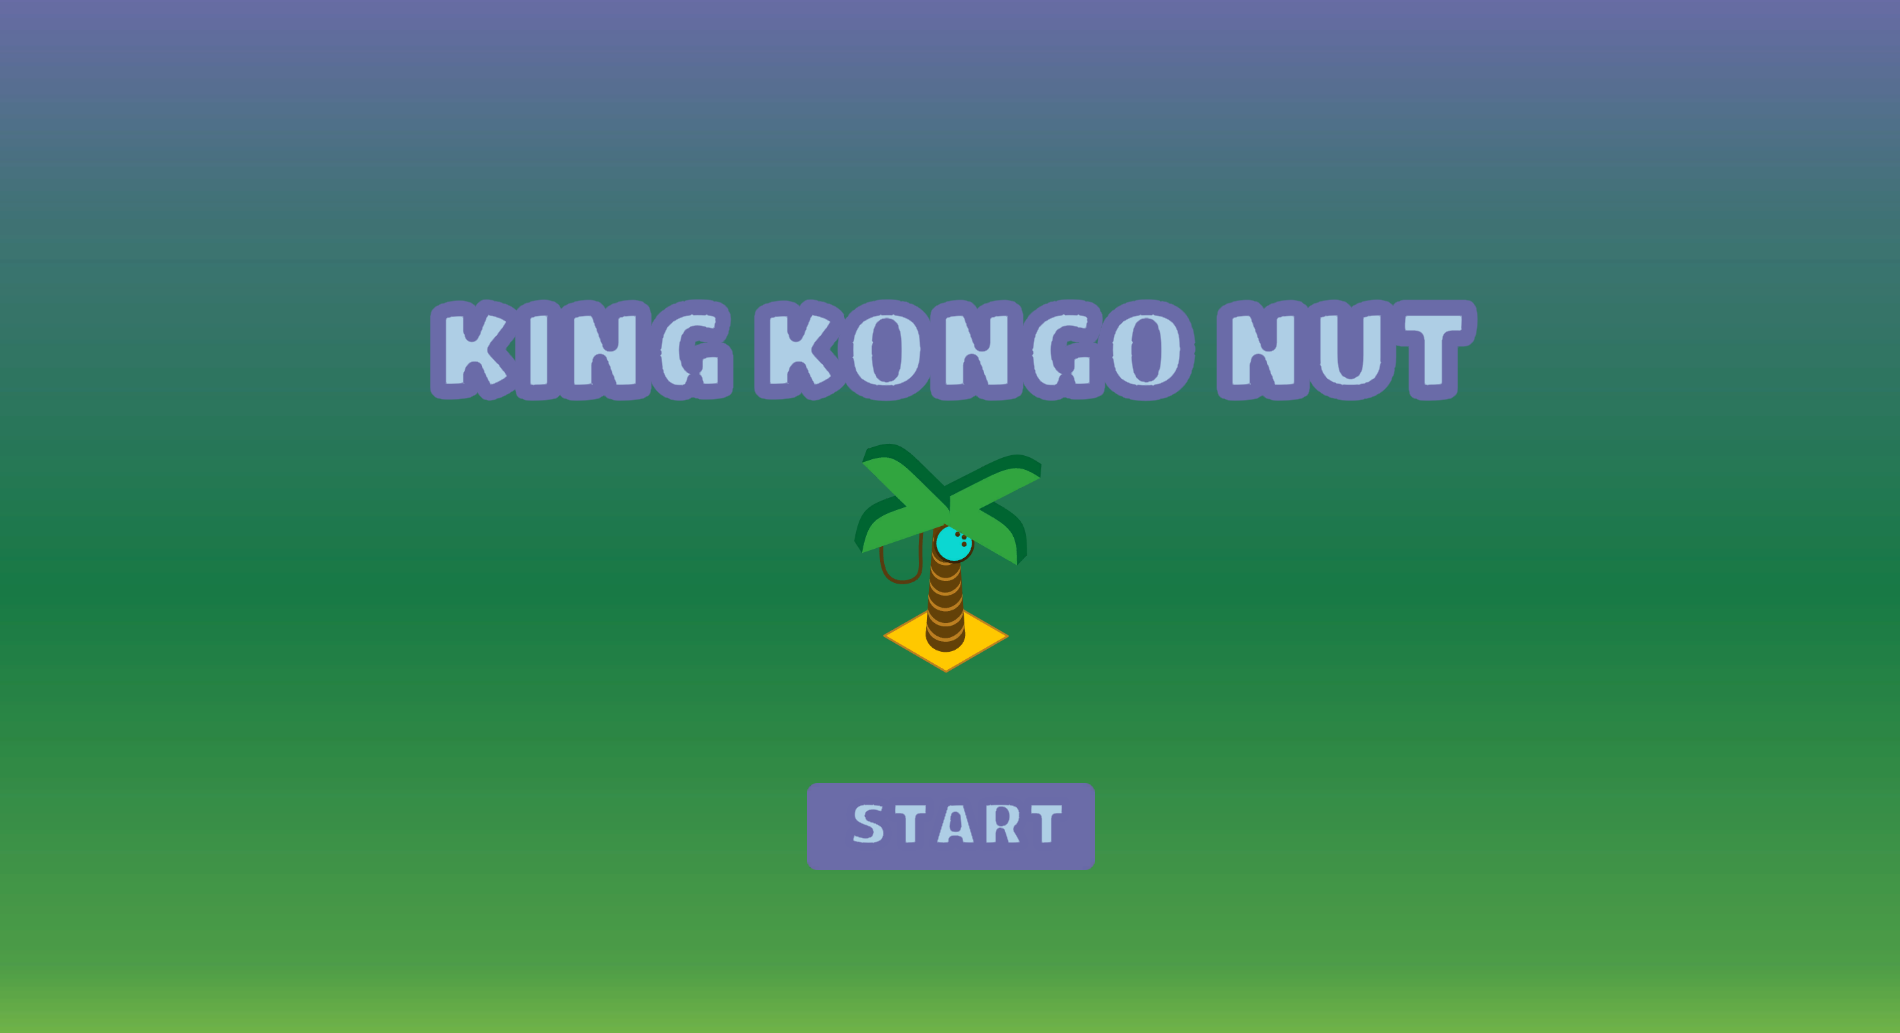 King Kongo Nut